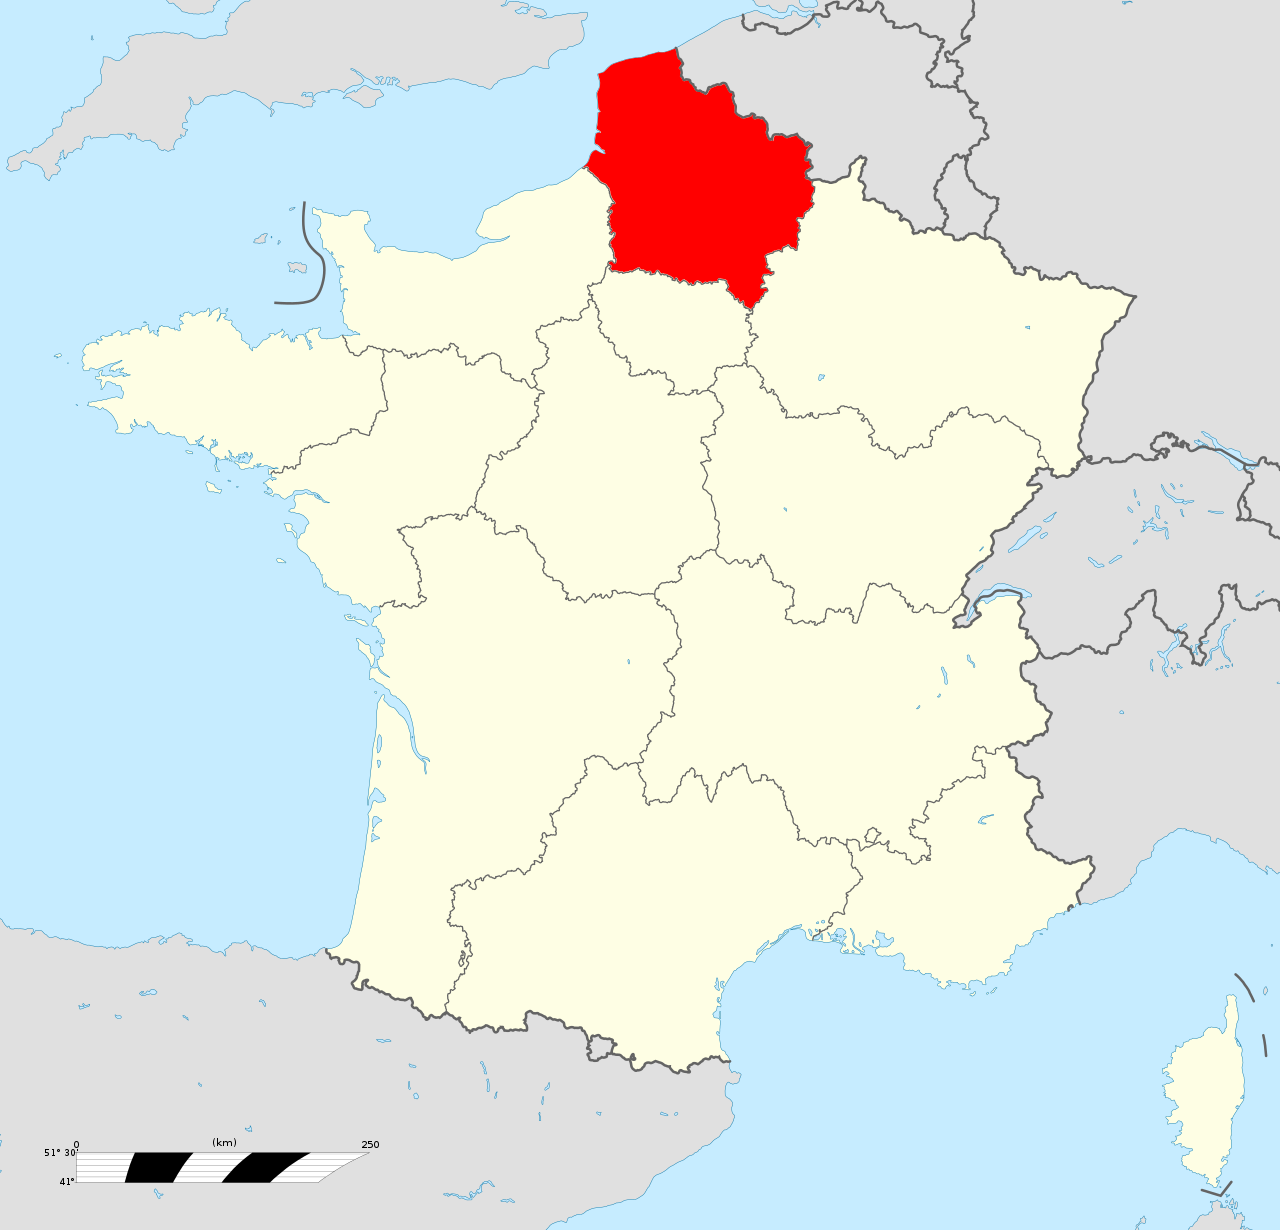 Sugar Plant House Urbex locatie in of rond de regio Hauts-de-France (Aisne), France